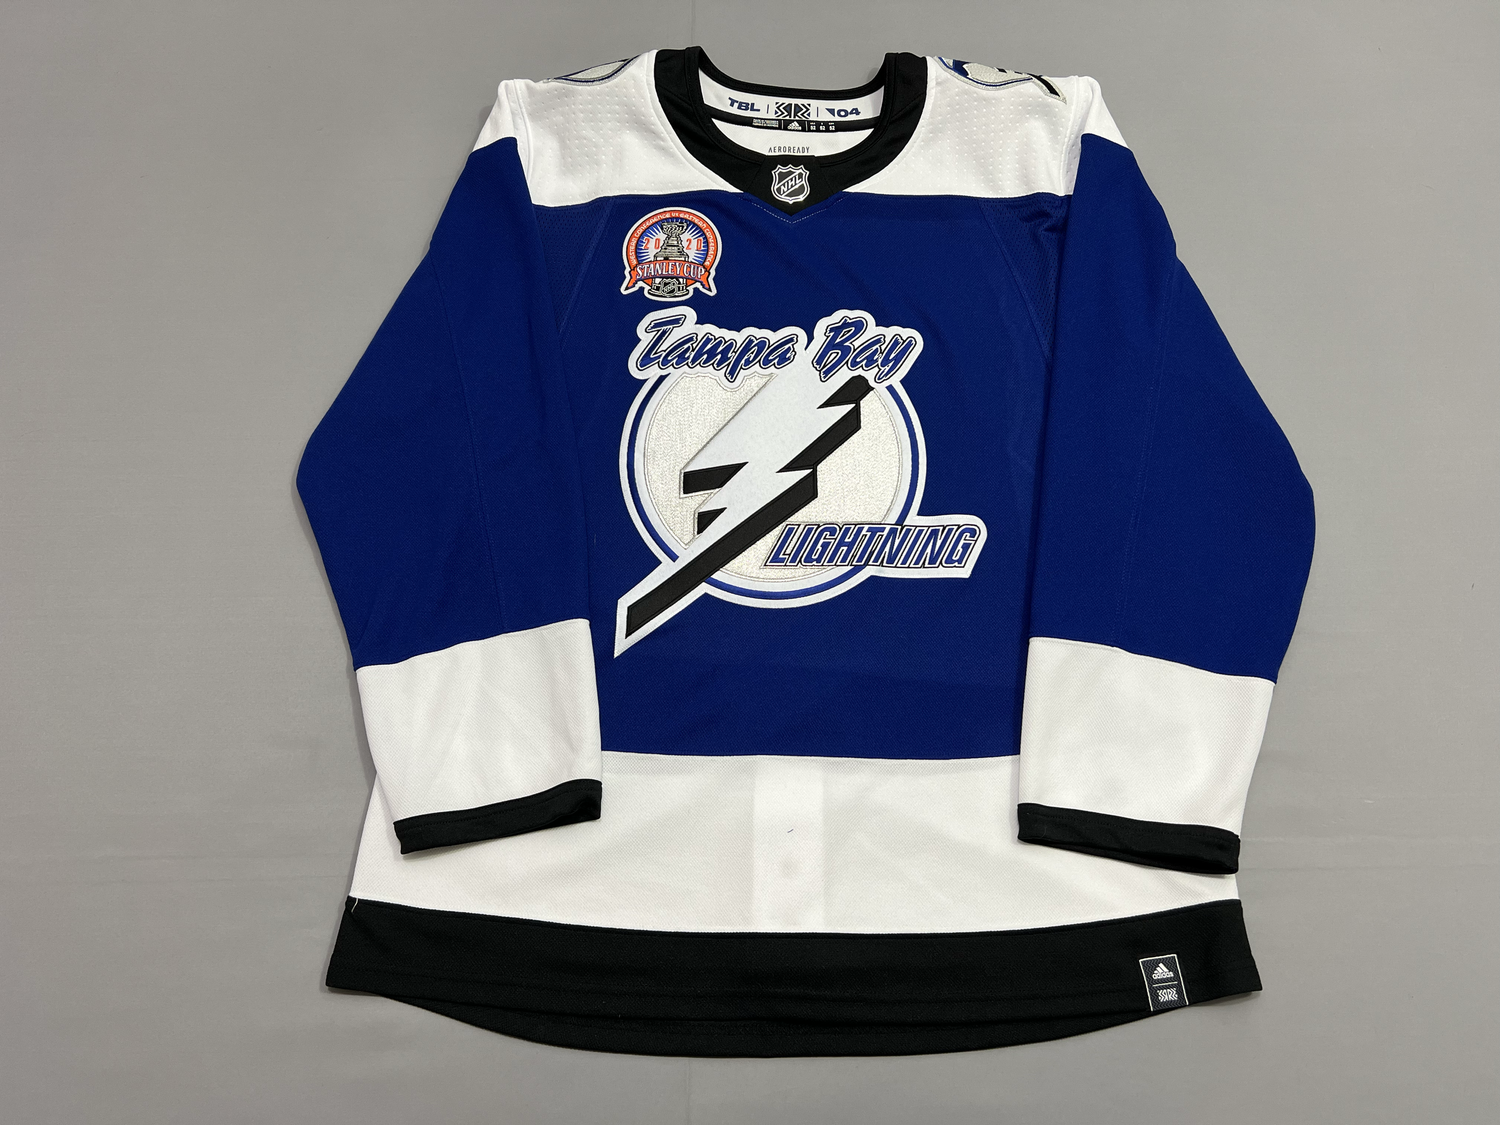 St. Louis Blues Reverse Retro Adidas Authentic NHL Hockey Jersey